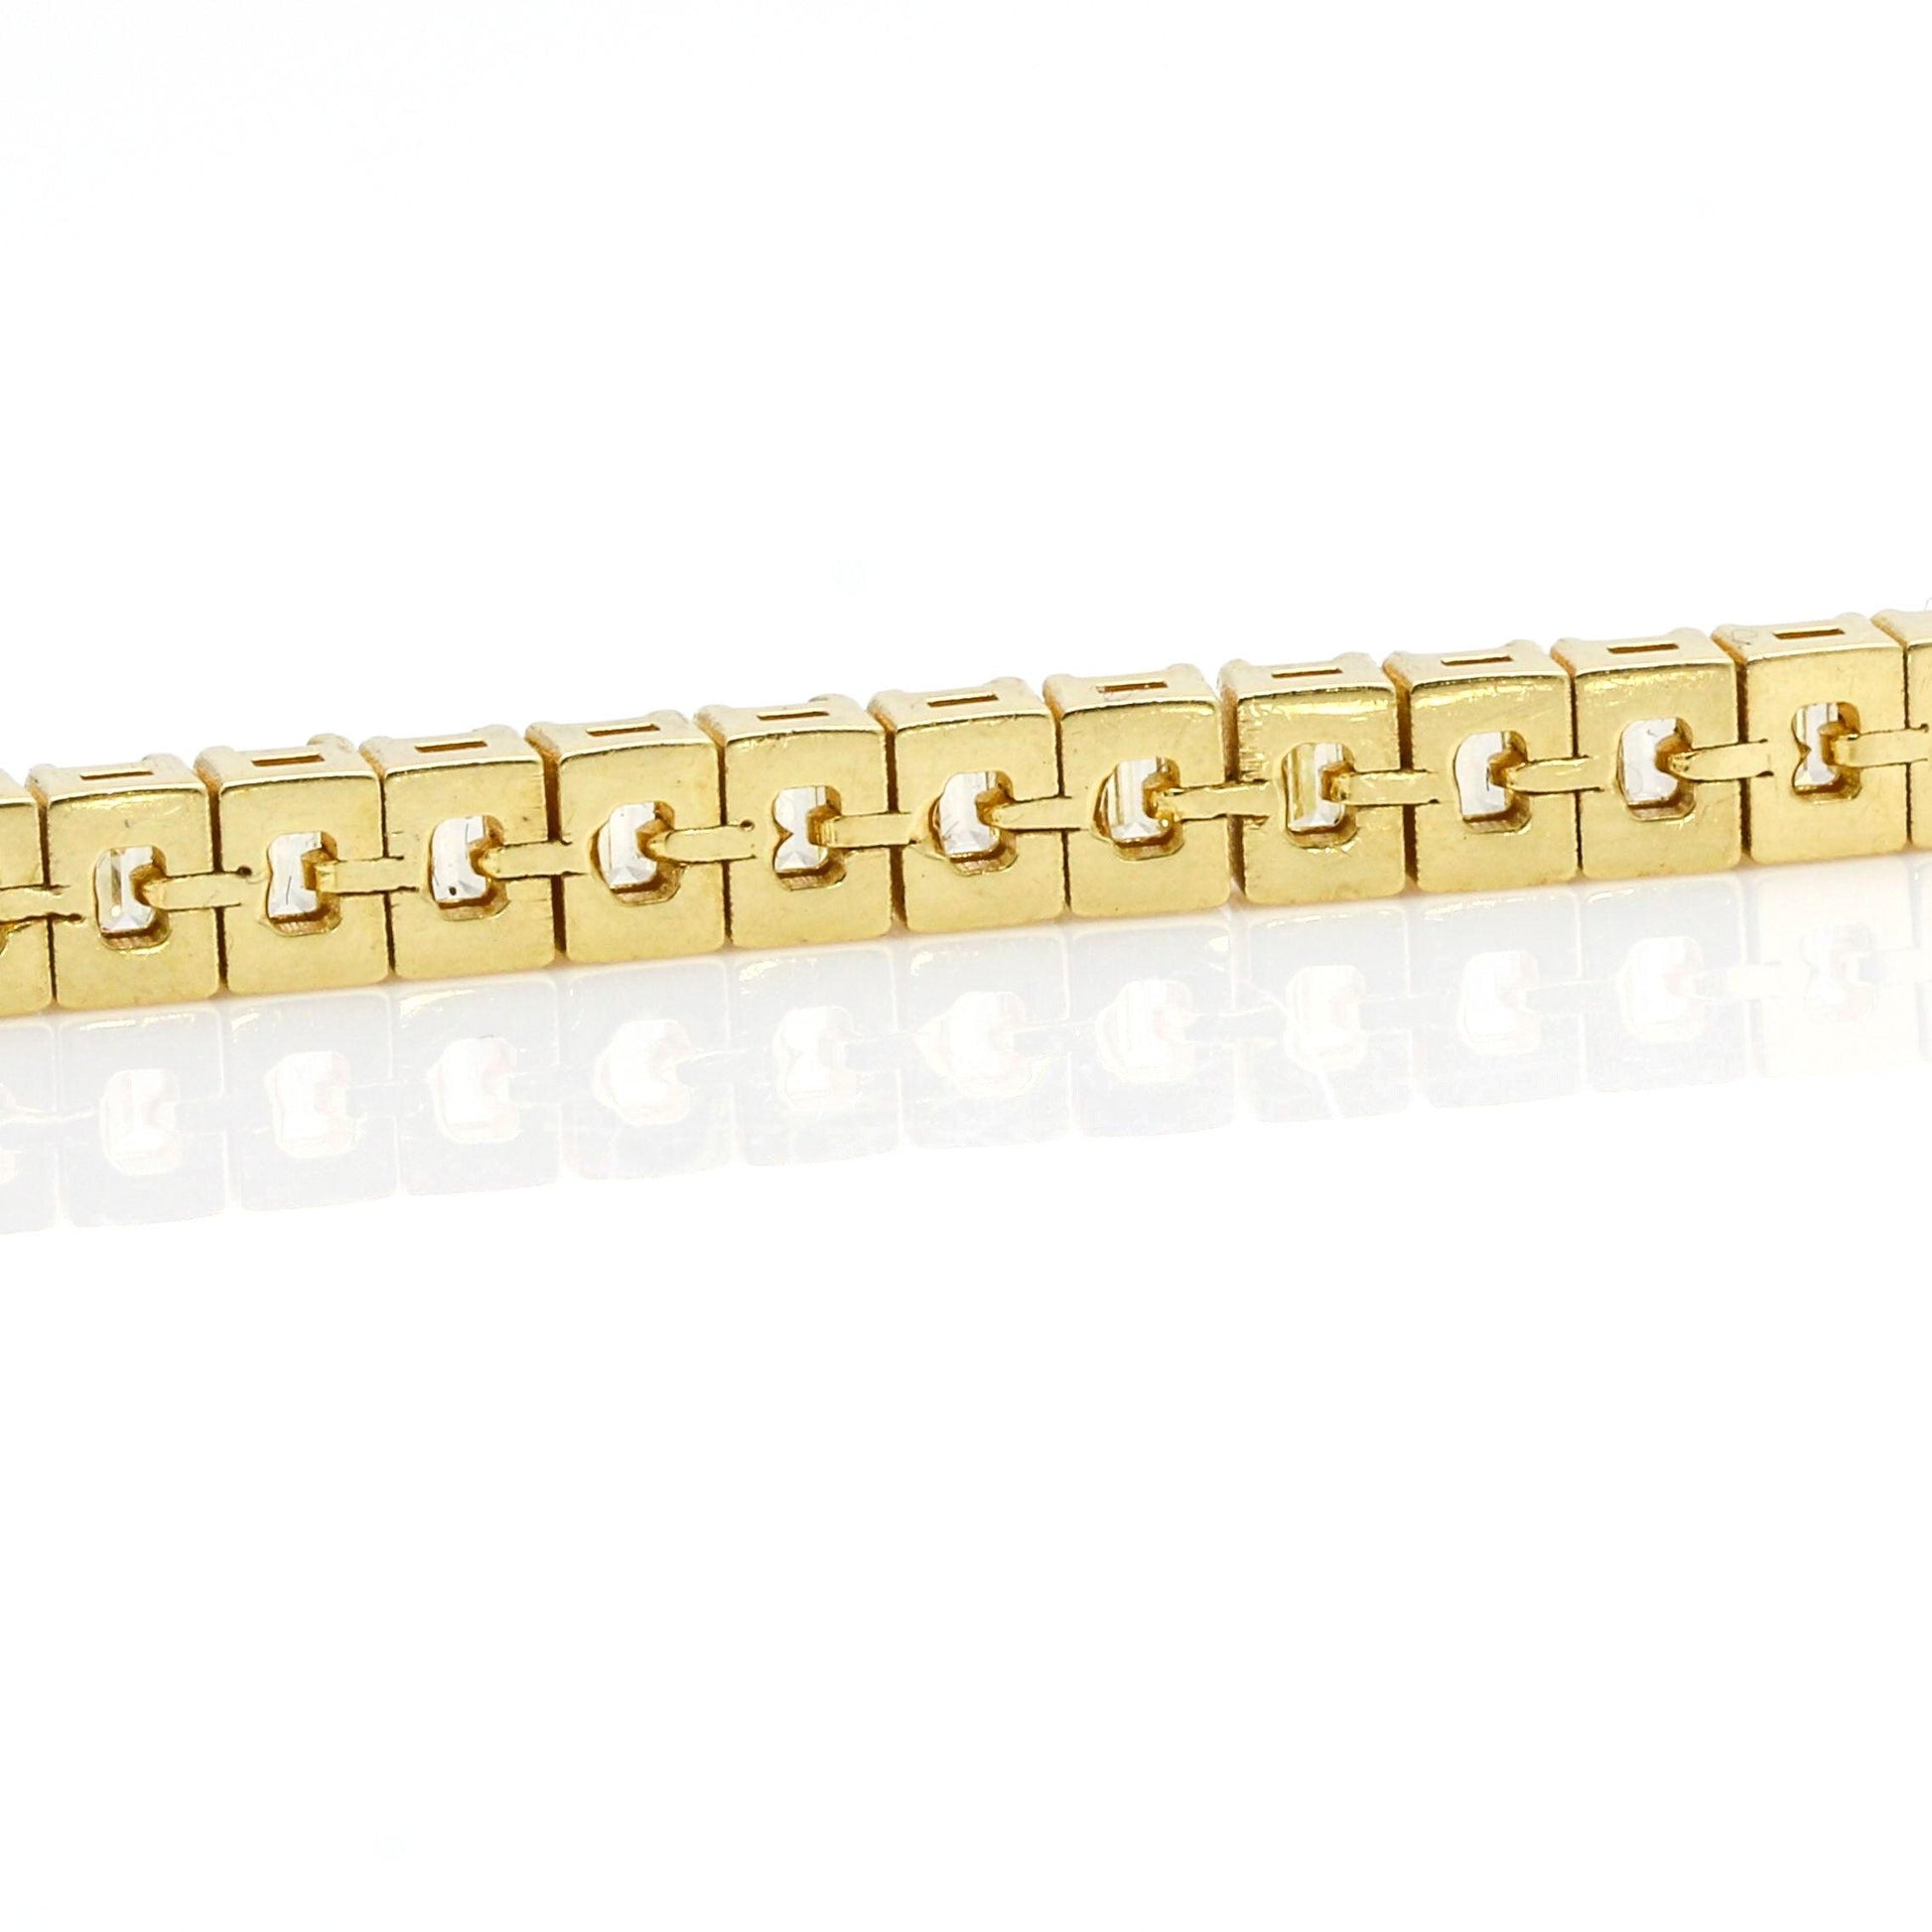 Woman's Emerald-Cut Diamond Tennis Bracelet in 14k Yellow Gold 8.97 cttw - 31 Jewels Inc.